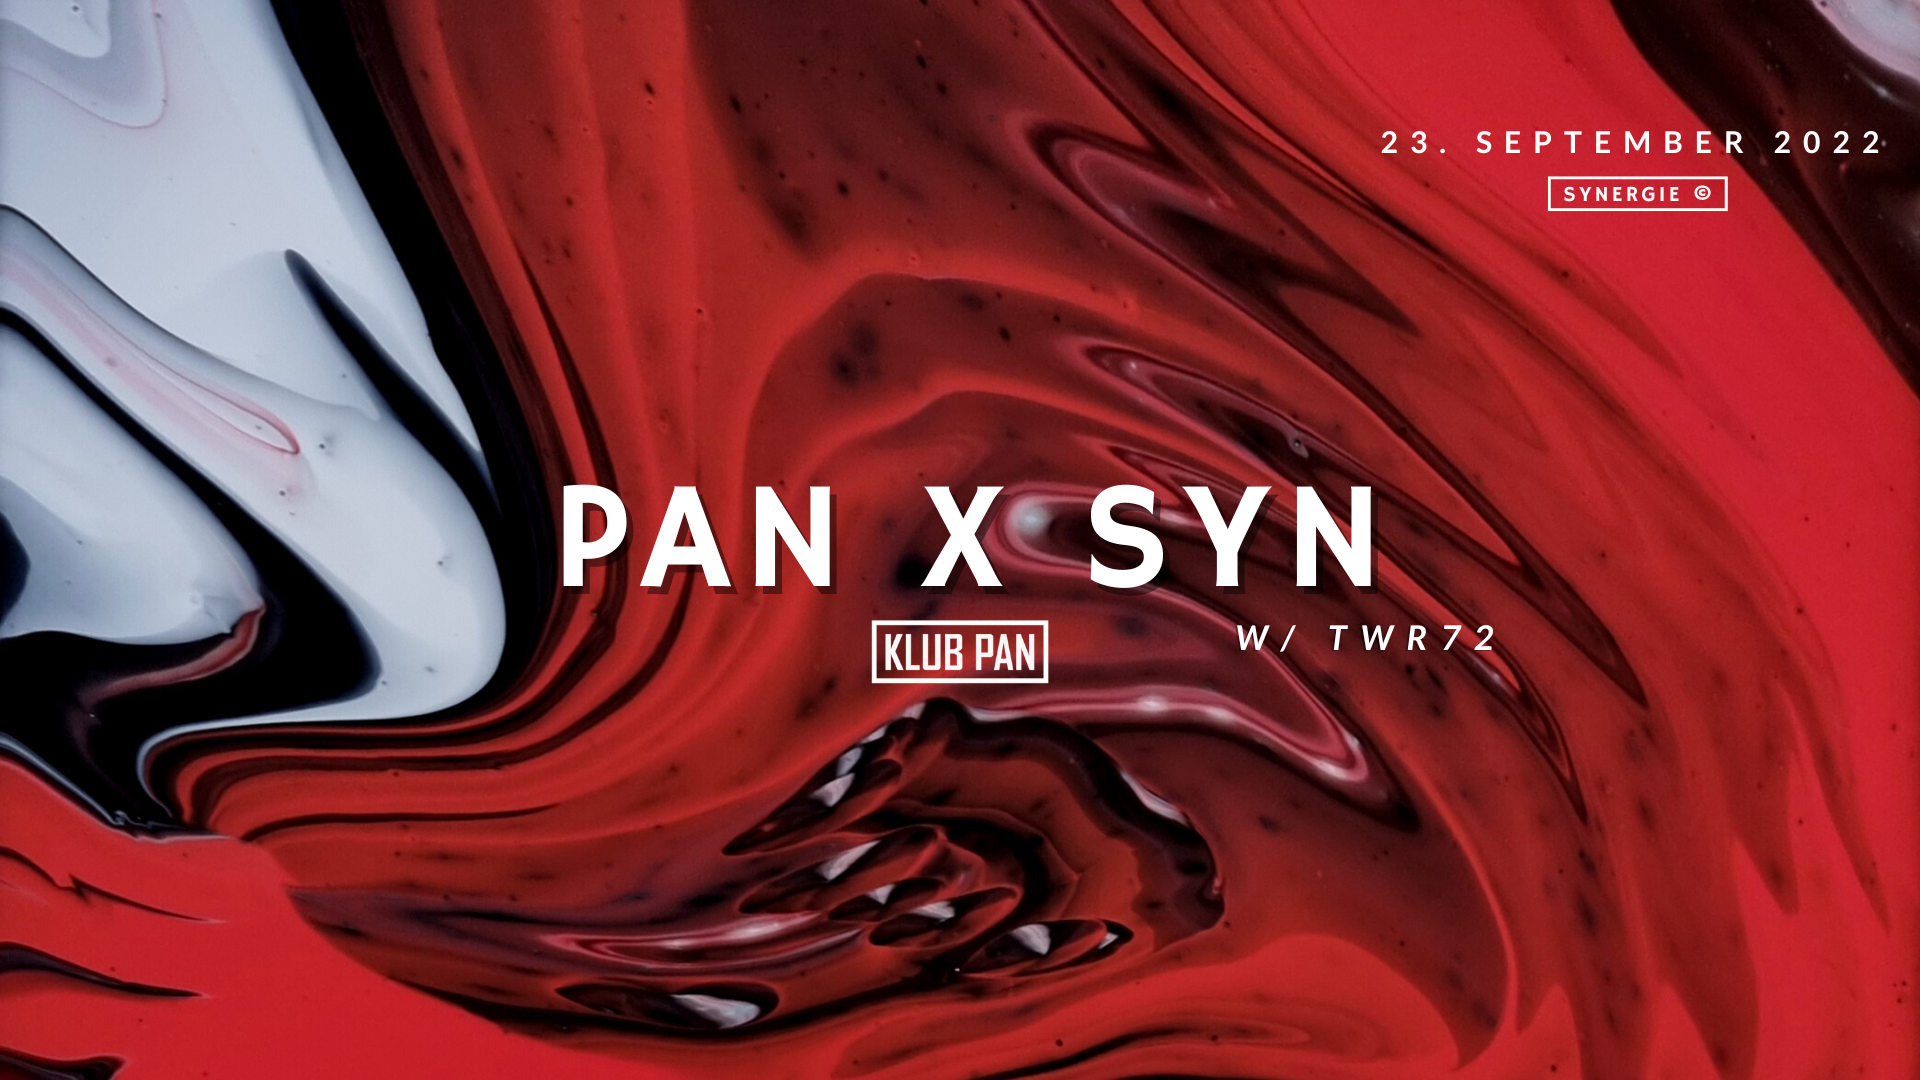 Xxx Jks Hd Vidio - PAN x SYN with TWR72 at Klub PAN, Hannover